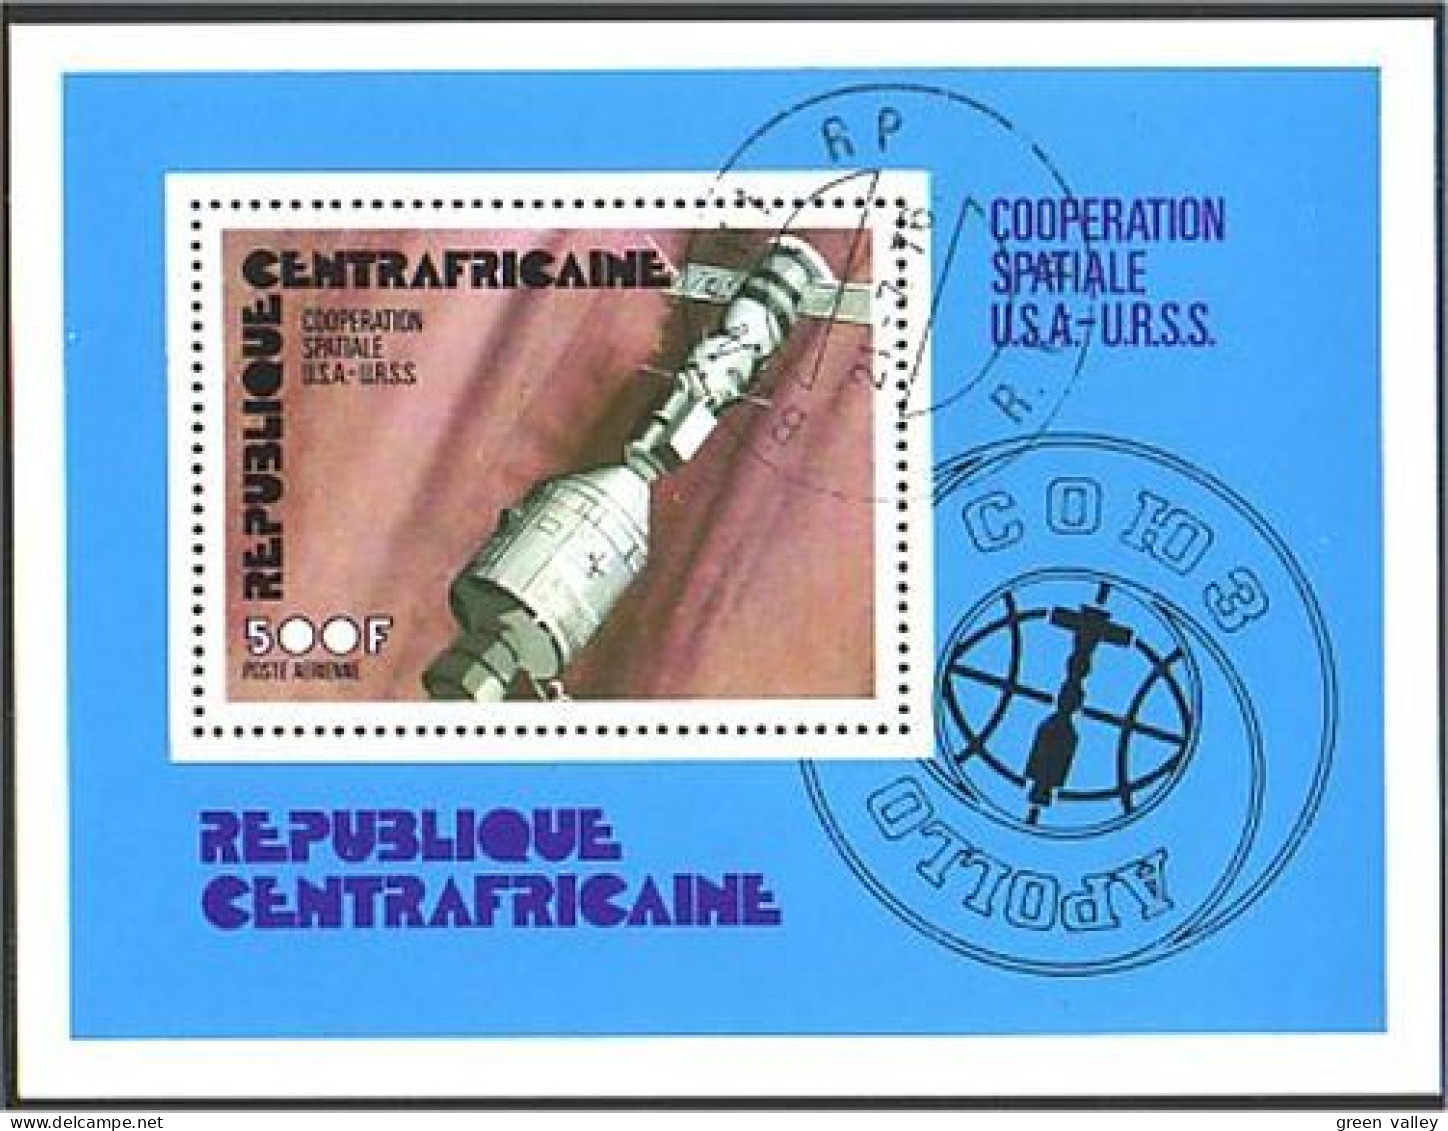 Centrafrique Cooperation Spatiale USA-URSS (A51-461) - Unabhängigkeit USA